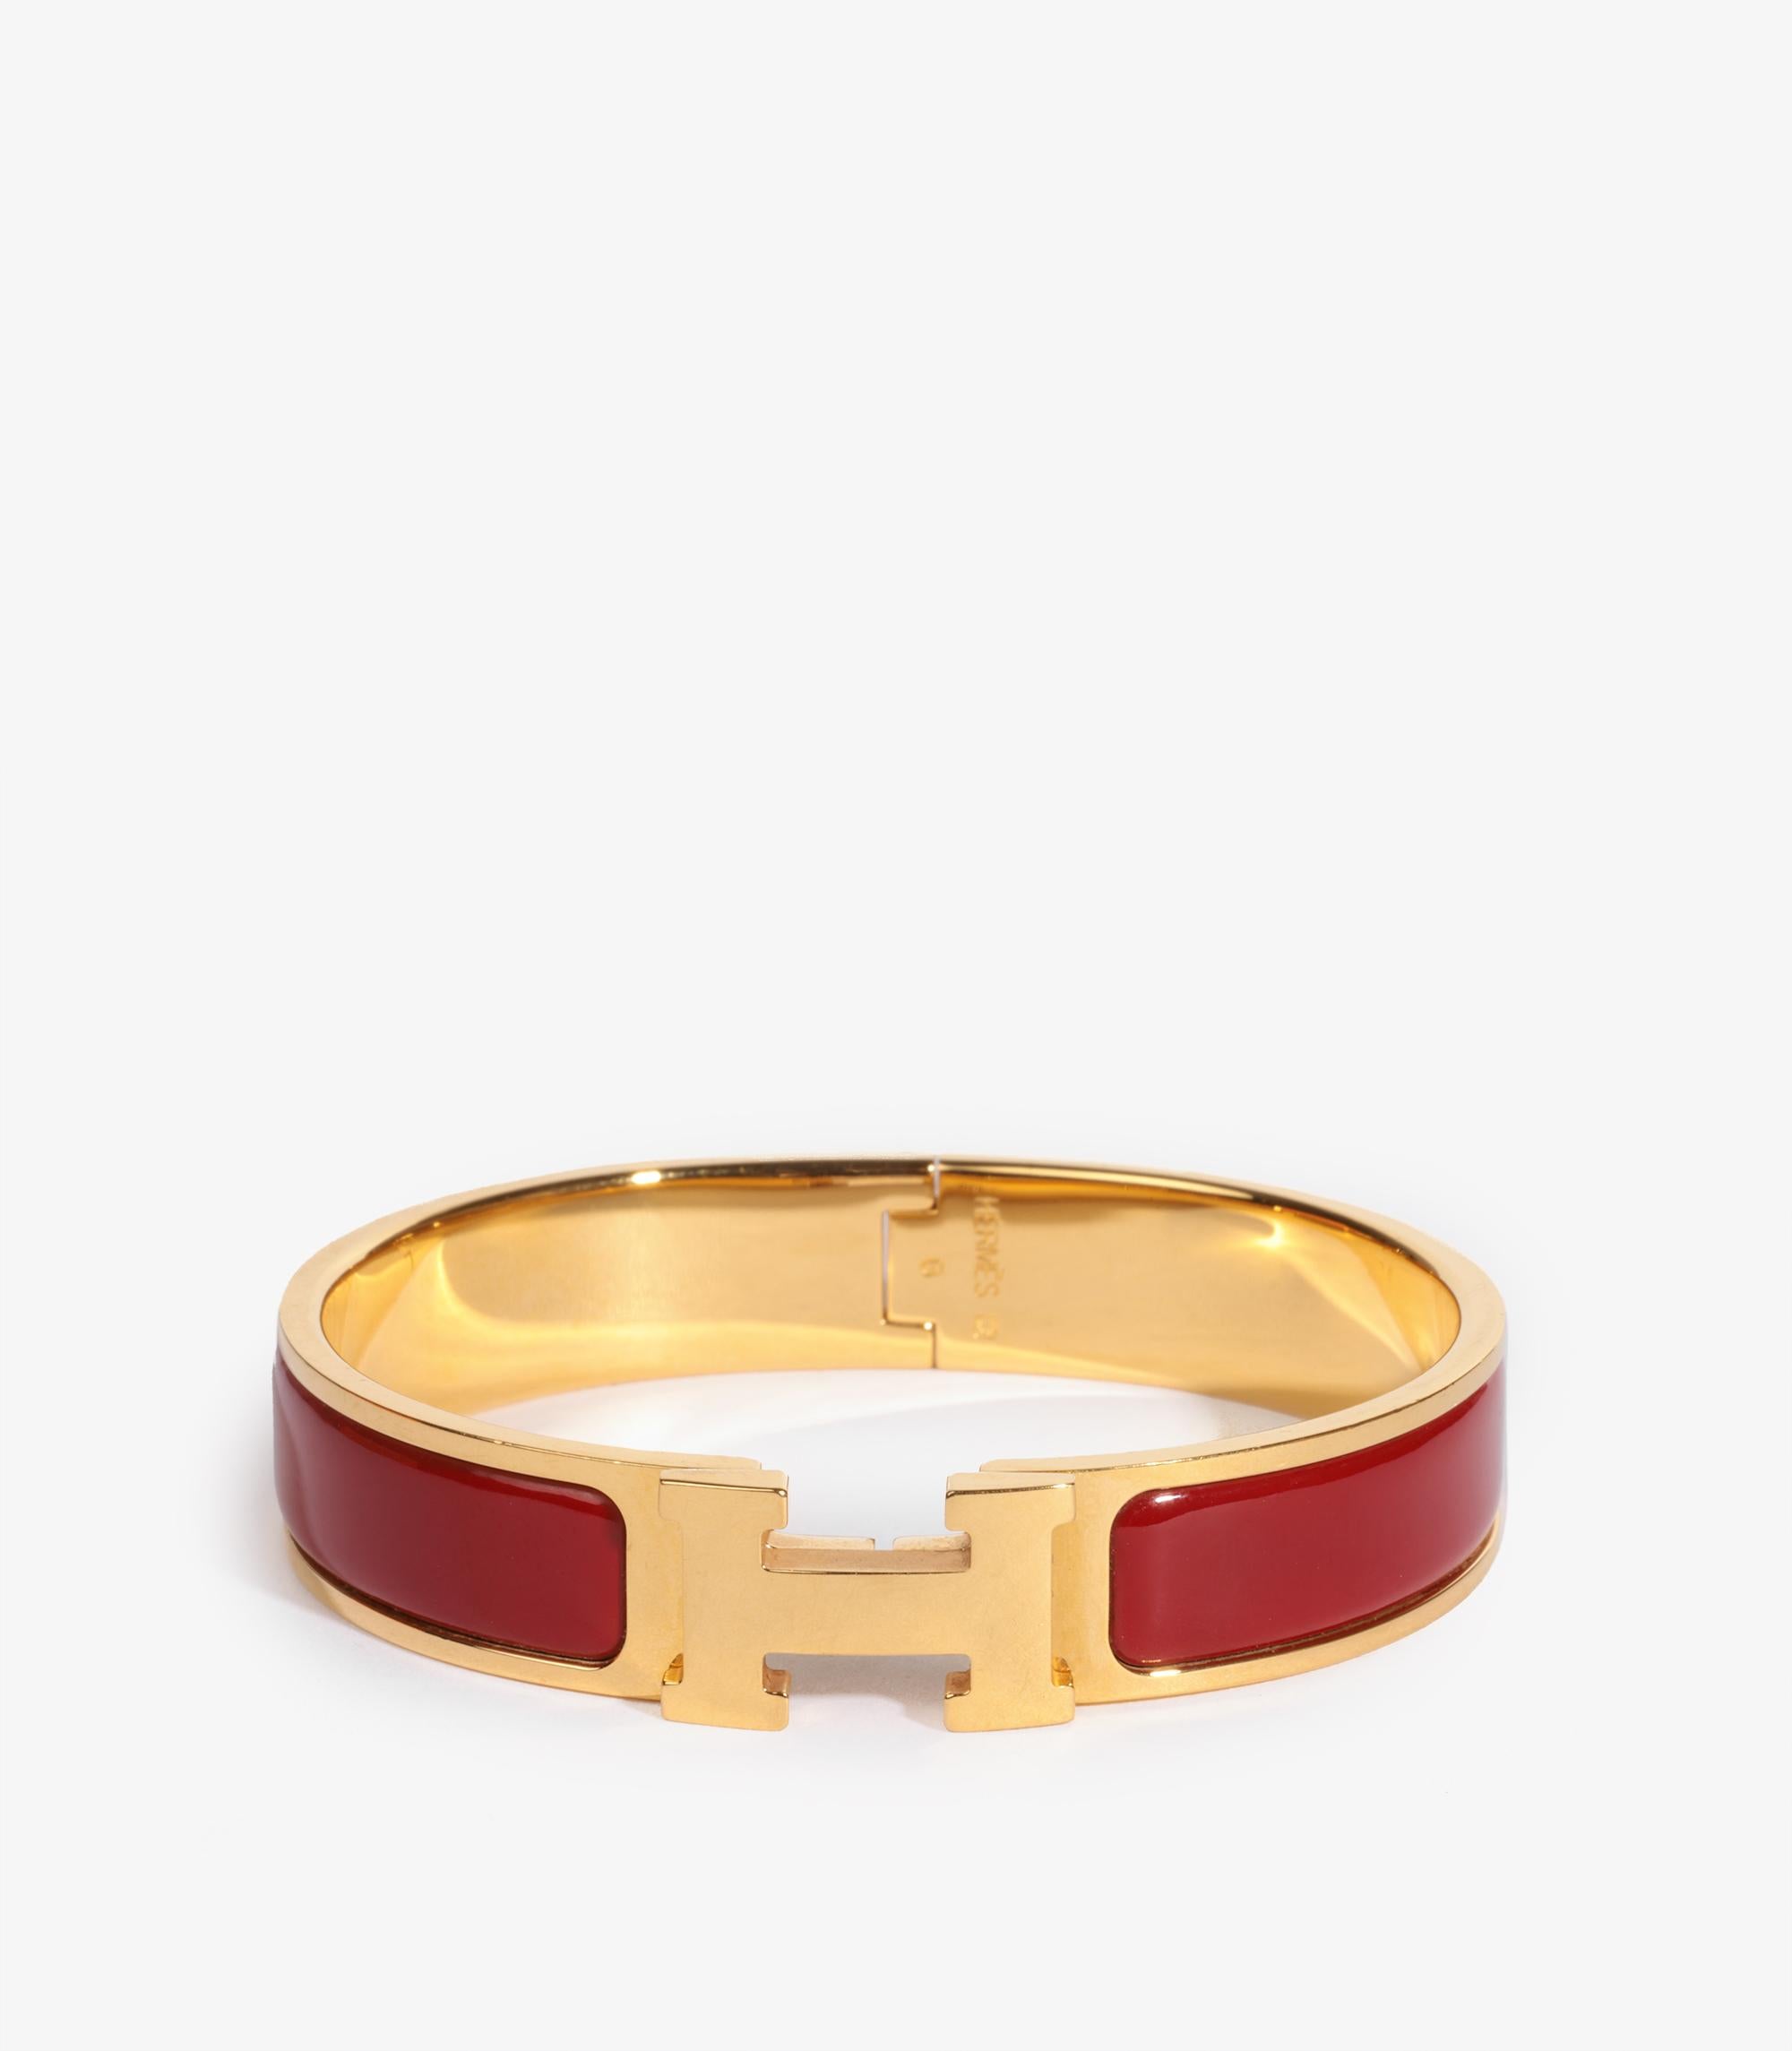 Hermès Gold Plated Rouge PM Clic H Bracelet

Brand- Hermès
Model- Clic H Bracelet
Product Type- Bracelet
Serial Number- *
Accompanied By- Hermès Box
Material(s)- Gold Tone Metal

Bracelet Length- 18cm
Bracelet Width- 1.2cm
Total Weight-